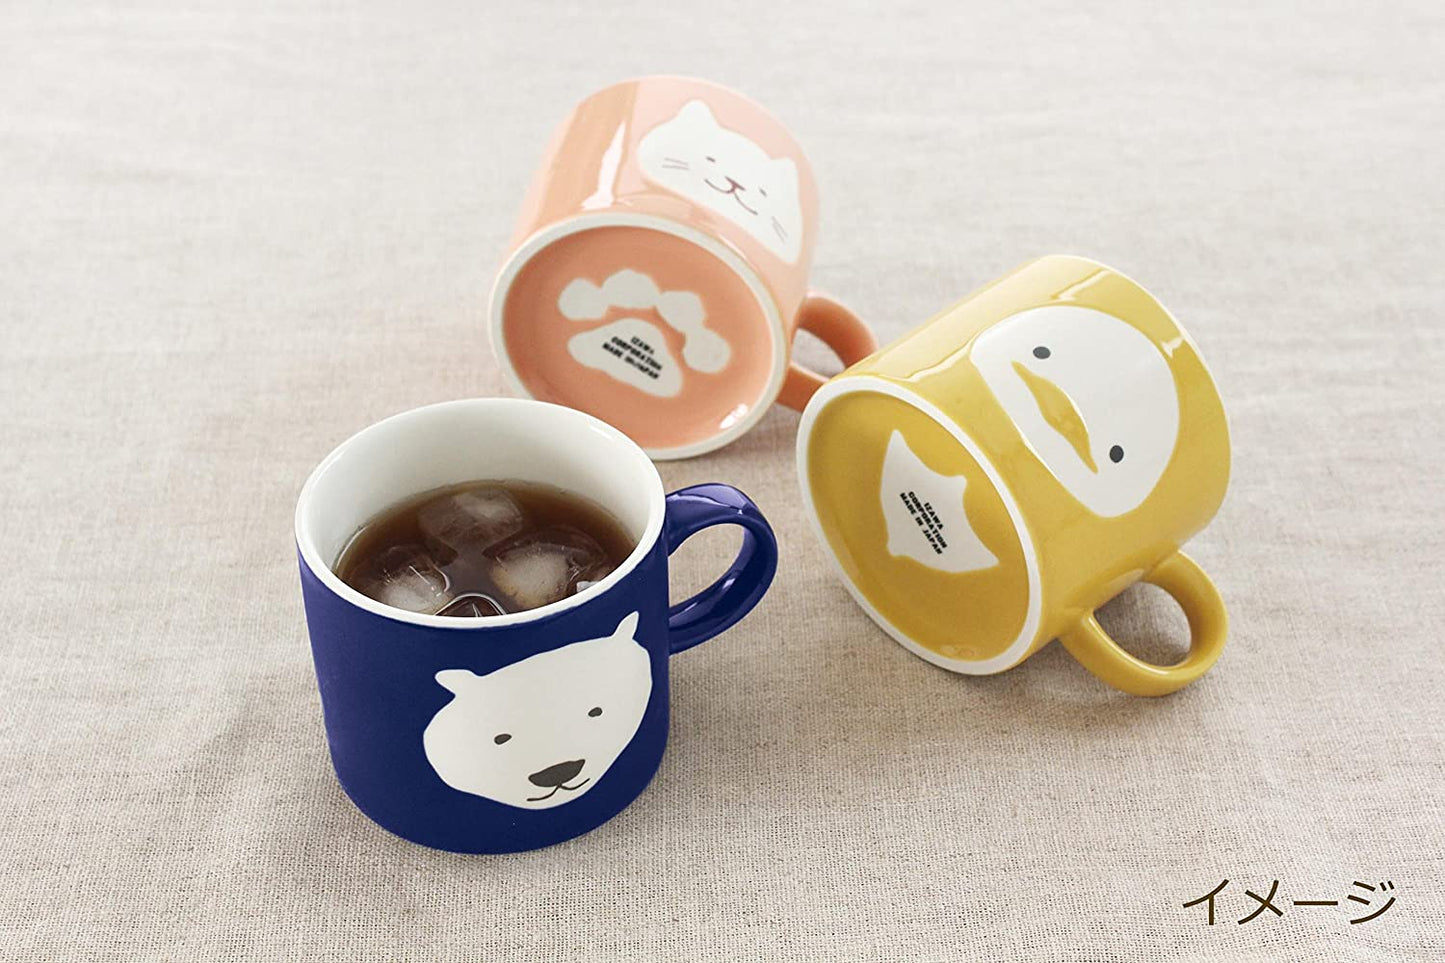 Minoyaki Easy Zoo Mug-Pola Bear日本美浓烧轻松动物园马克杯咖啡杯-北极熊